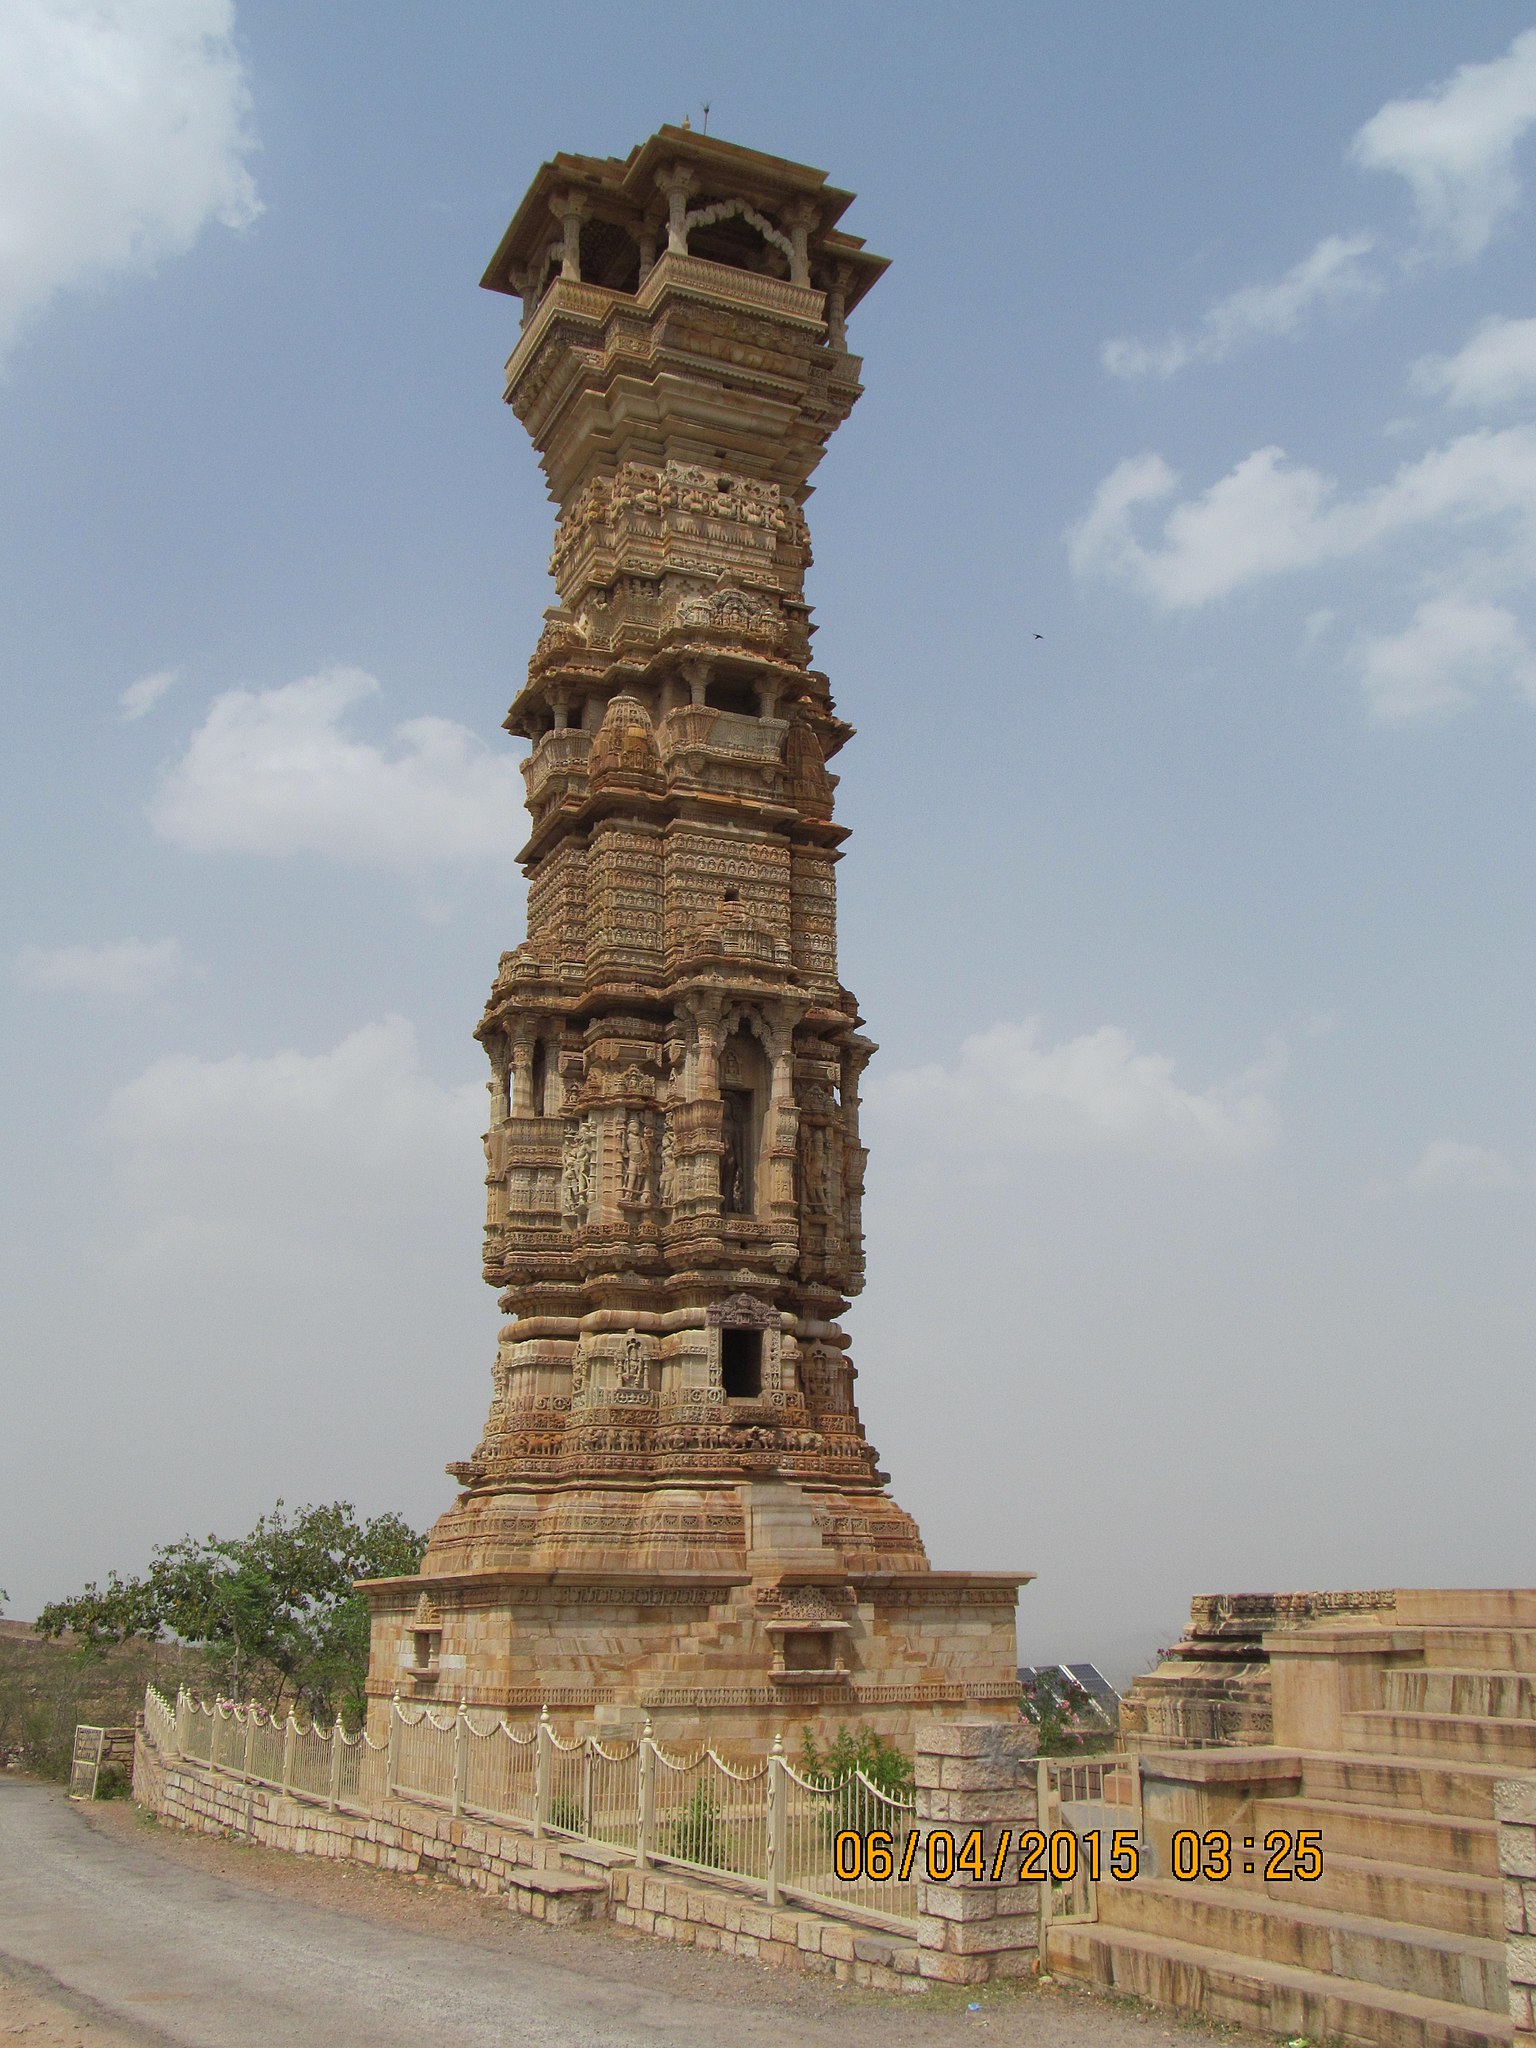 Kirti Stambh (Tower of Fame)